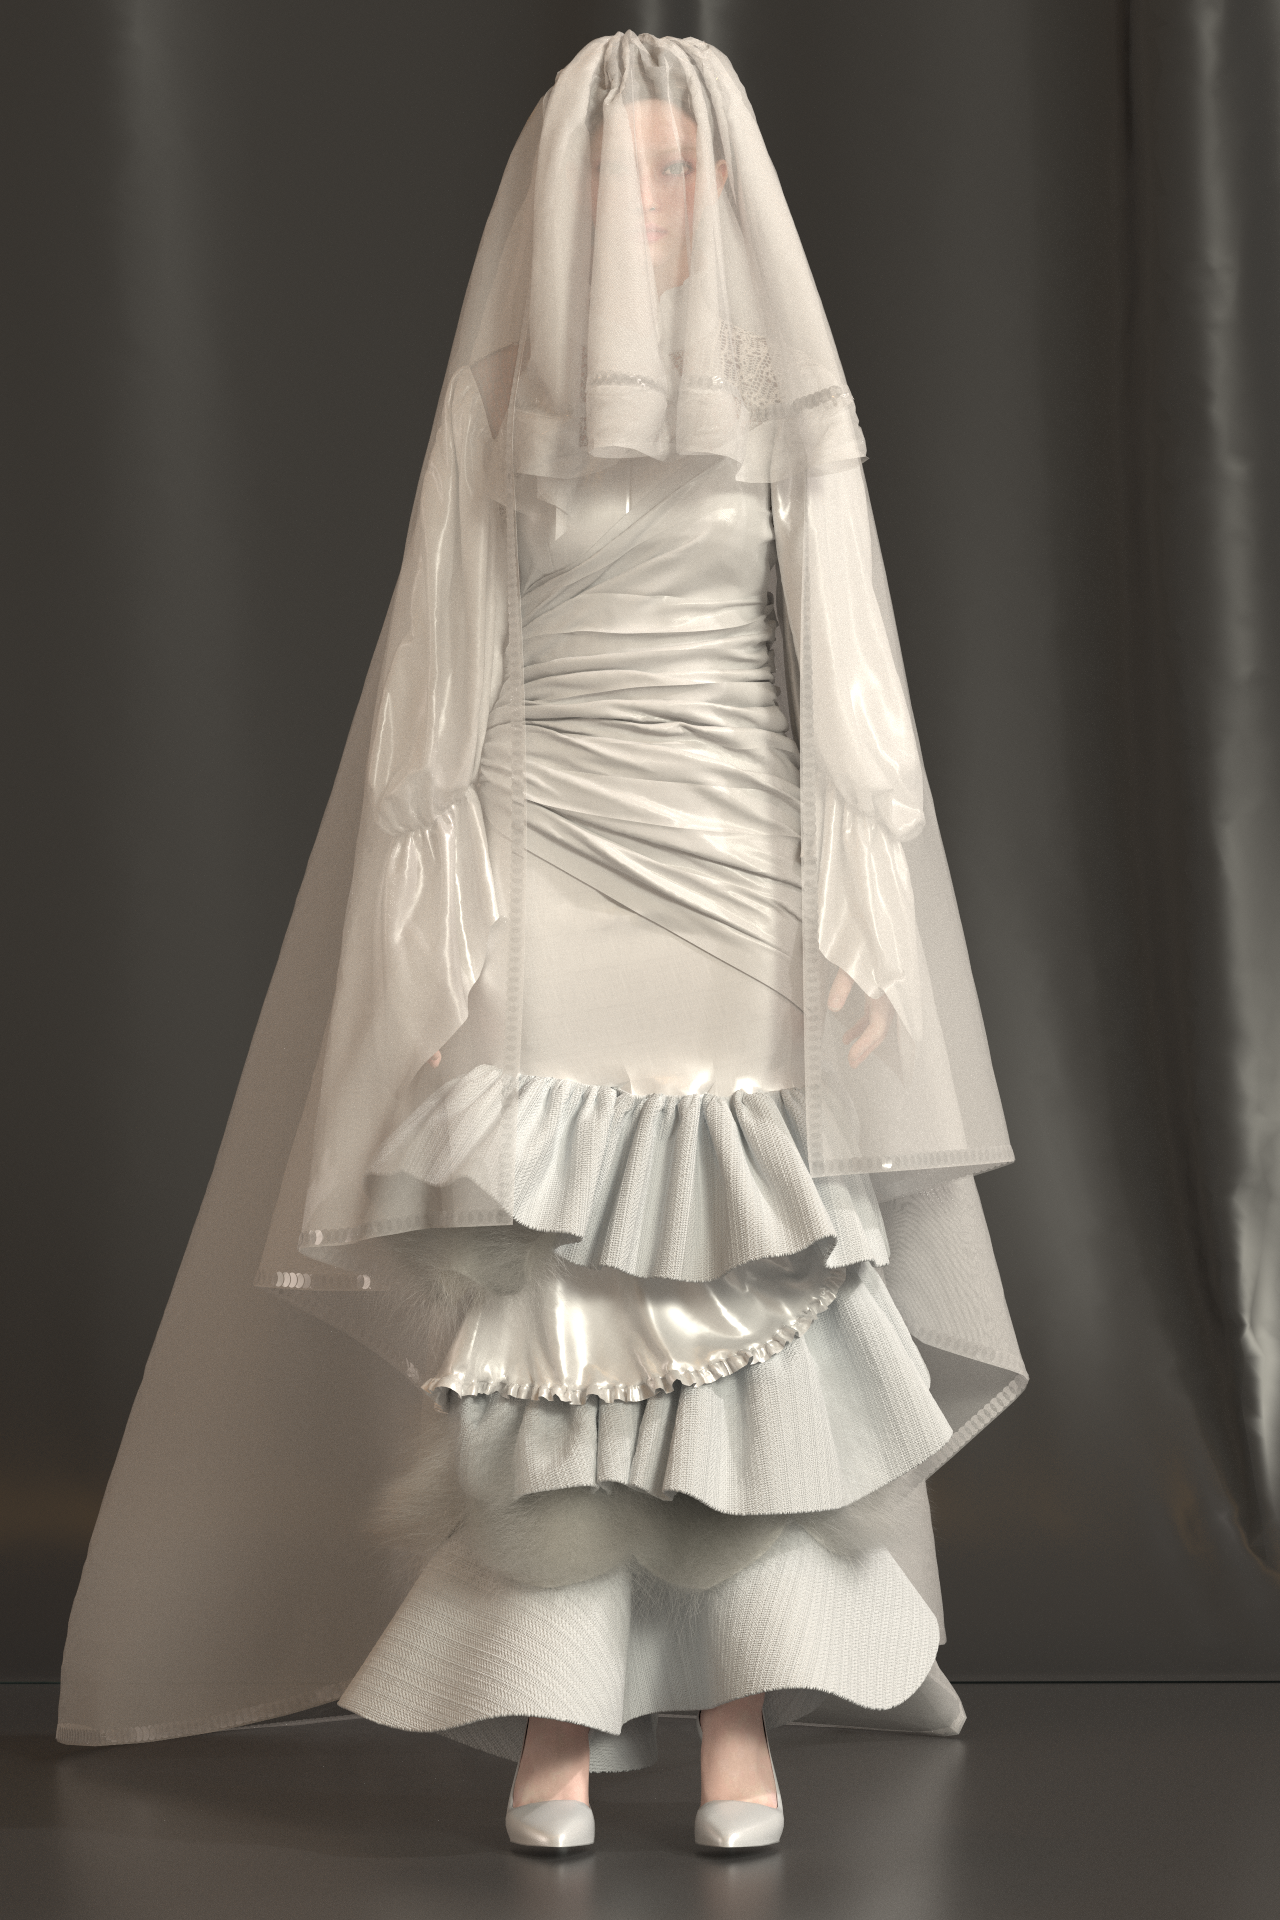 Handmade wedding dress